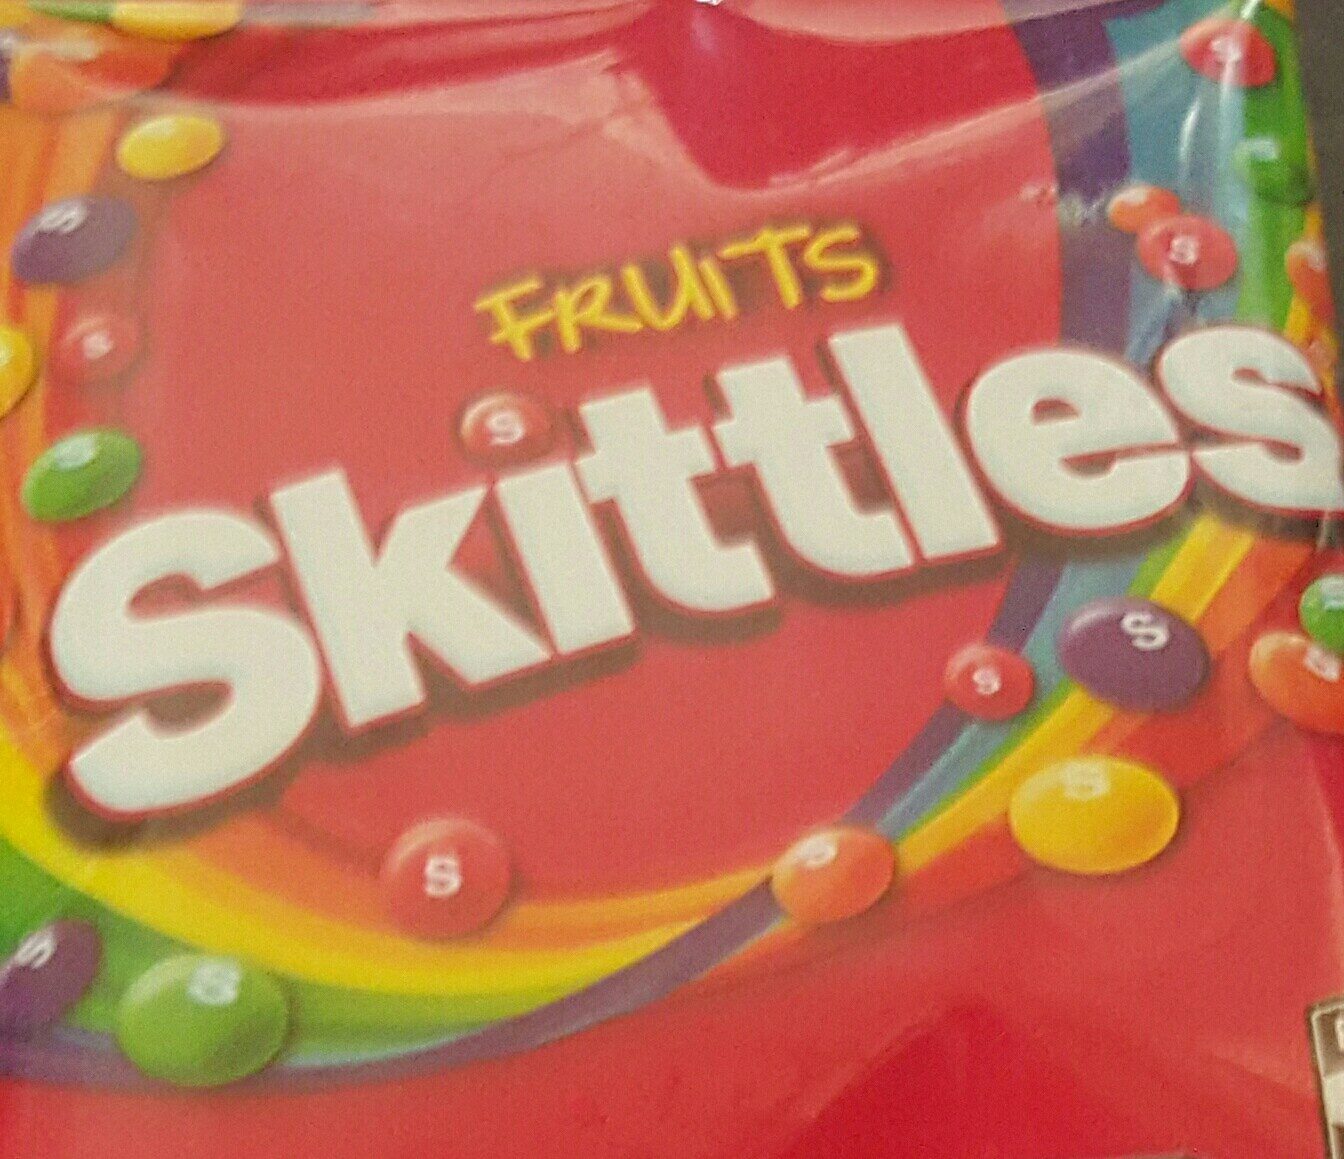 Fruit skittles - Product